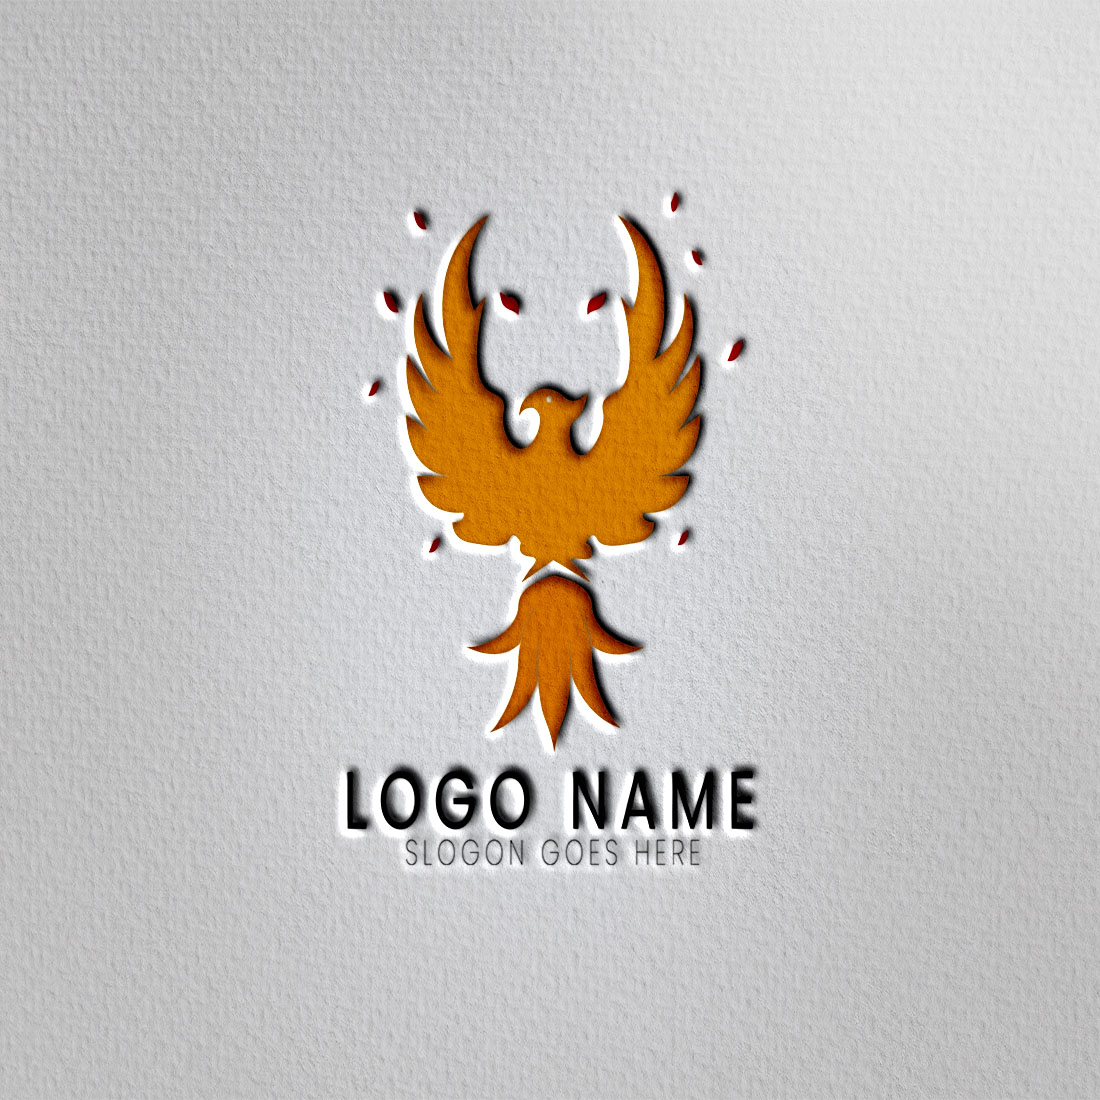 Bird logo, lion logo, Animal logo, letter name logo, Eagle logo, king logo, preview image.